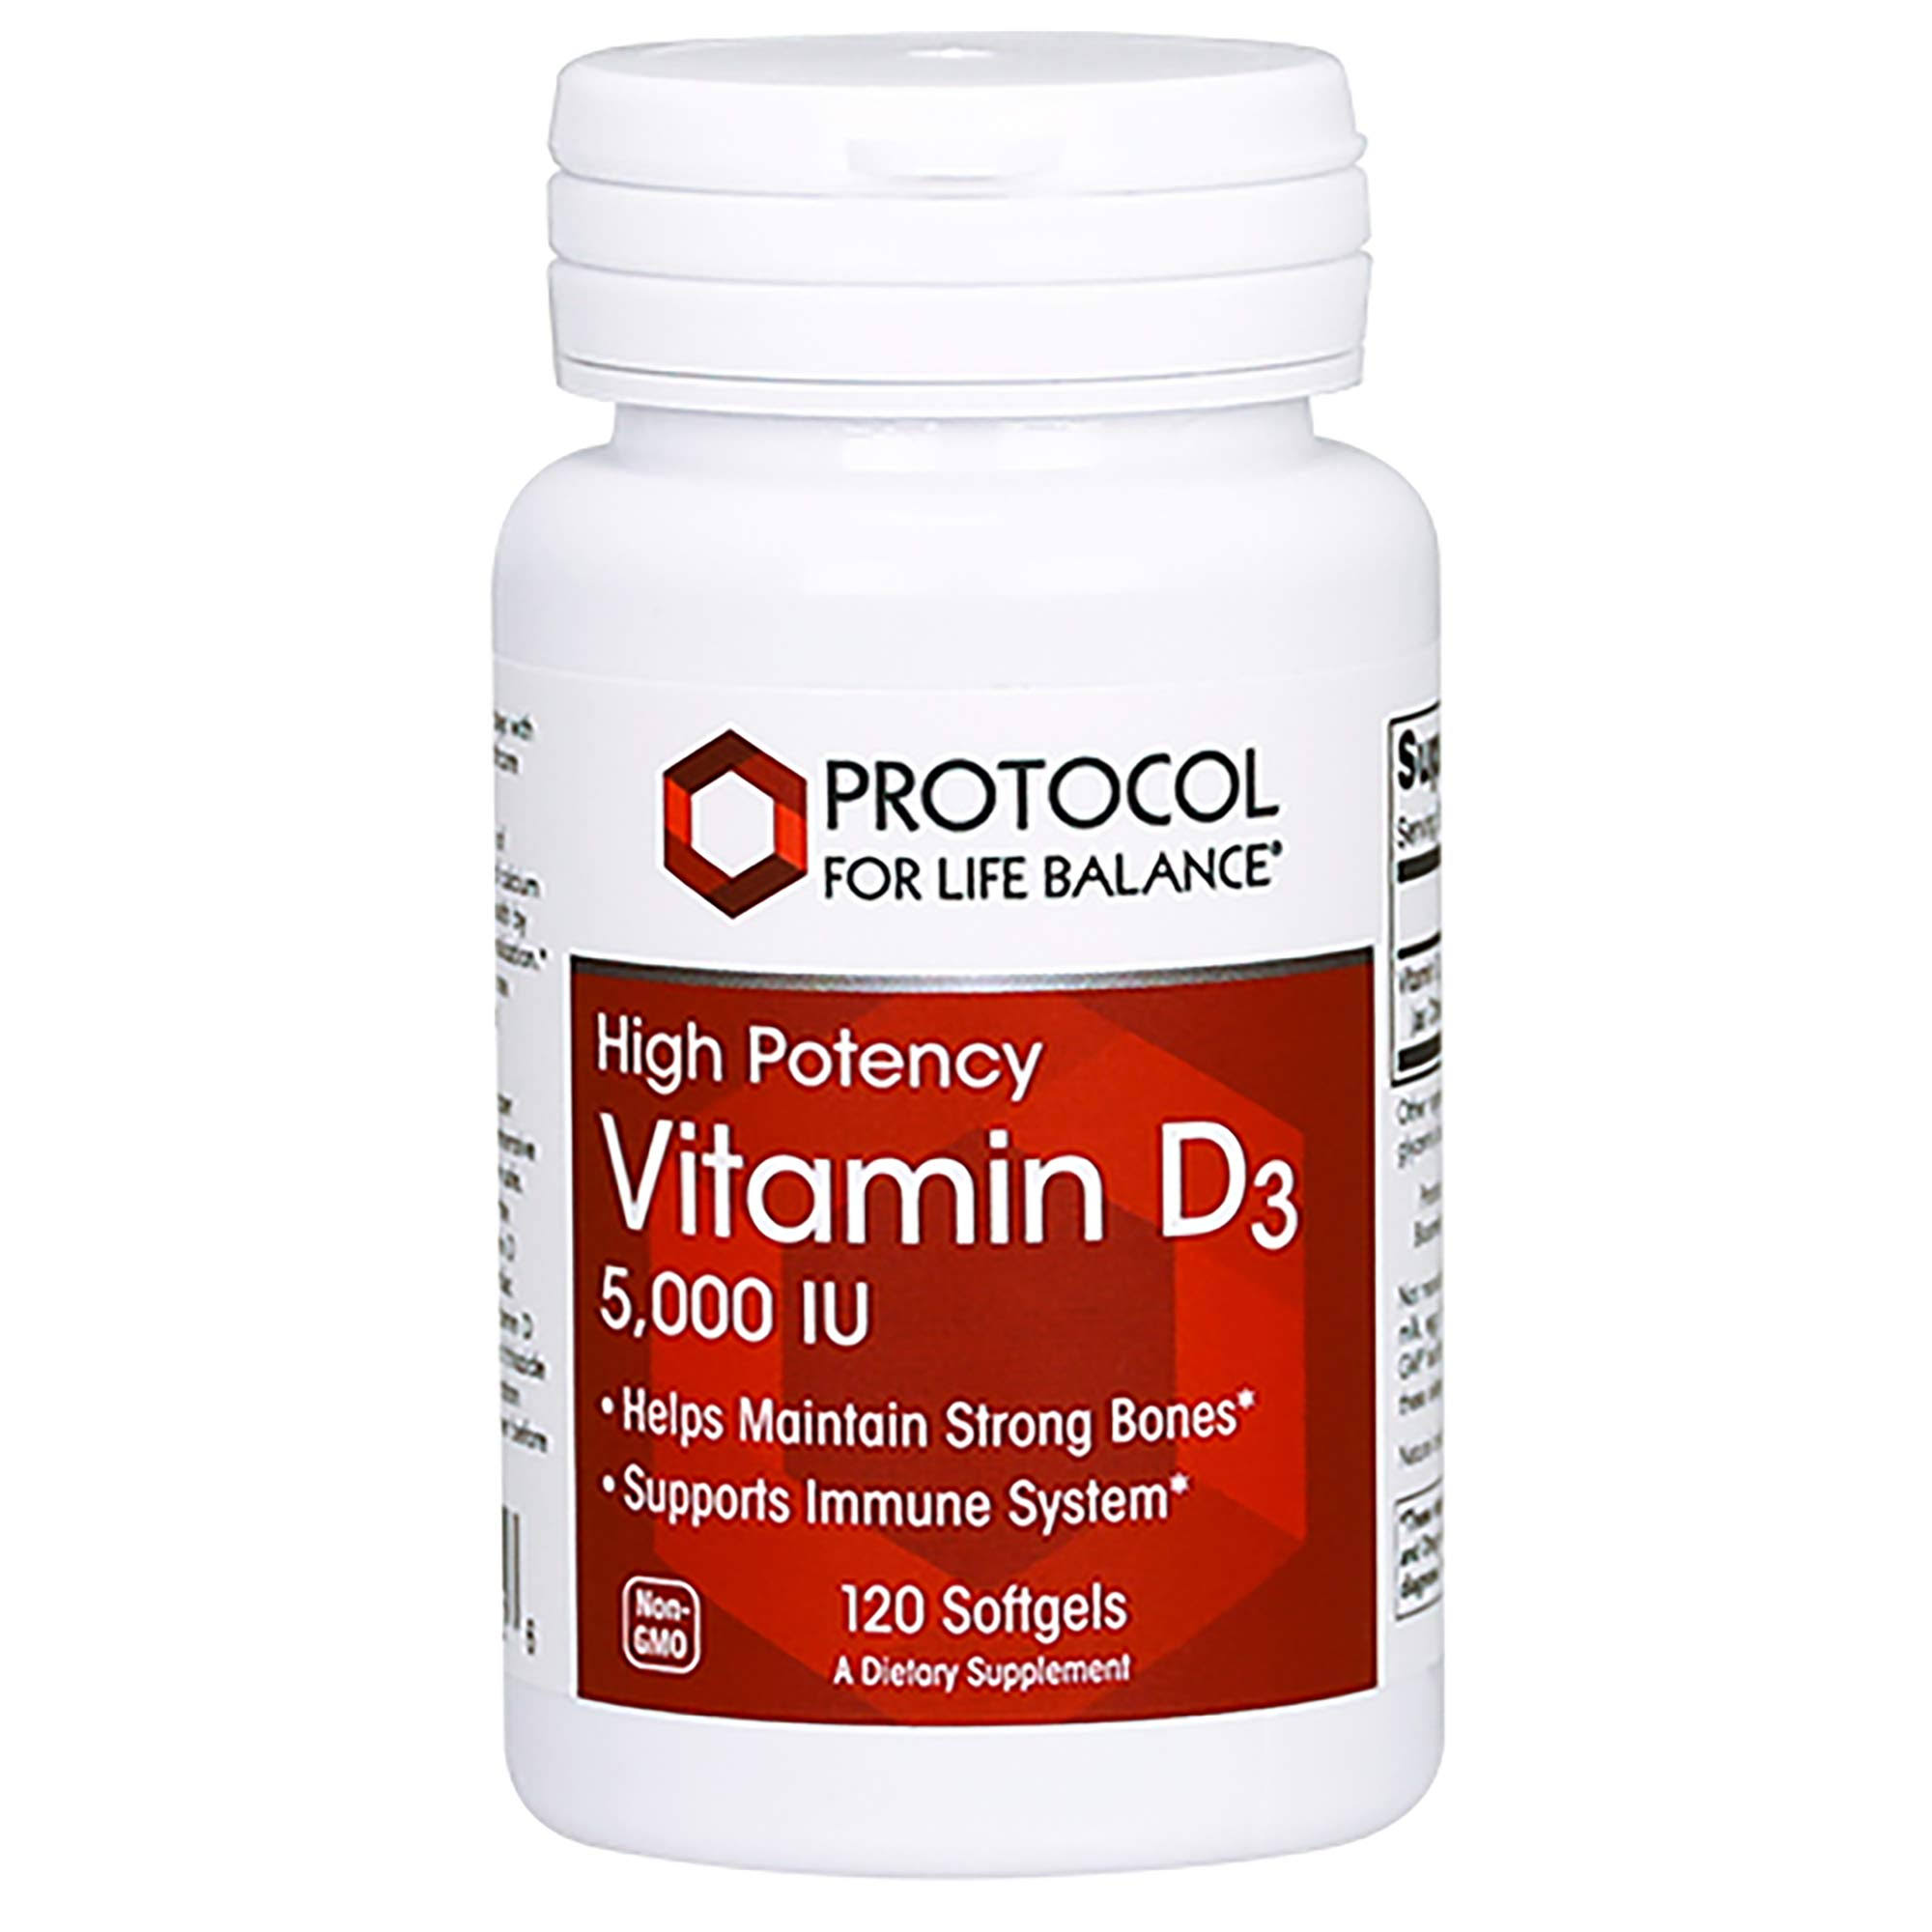 Protocol For Life Balance Vitamin D3 Supplement - 5,000 IU, 120 Softgels